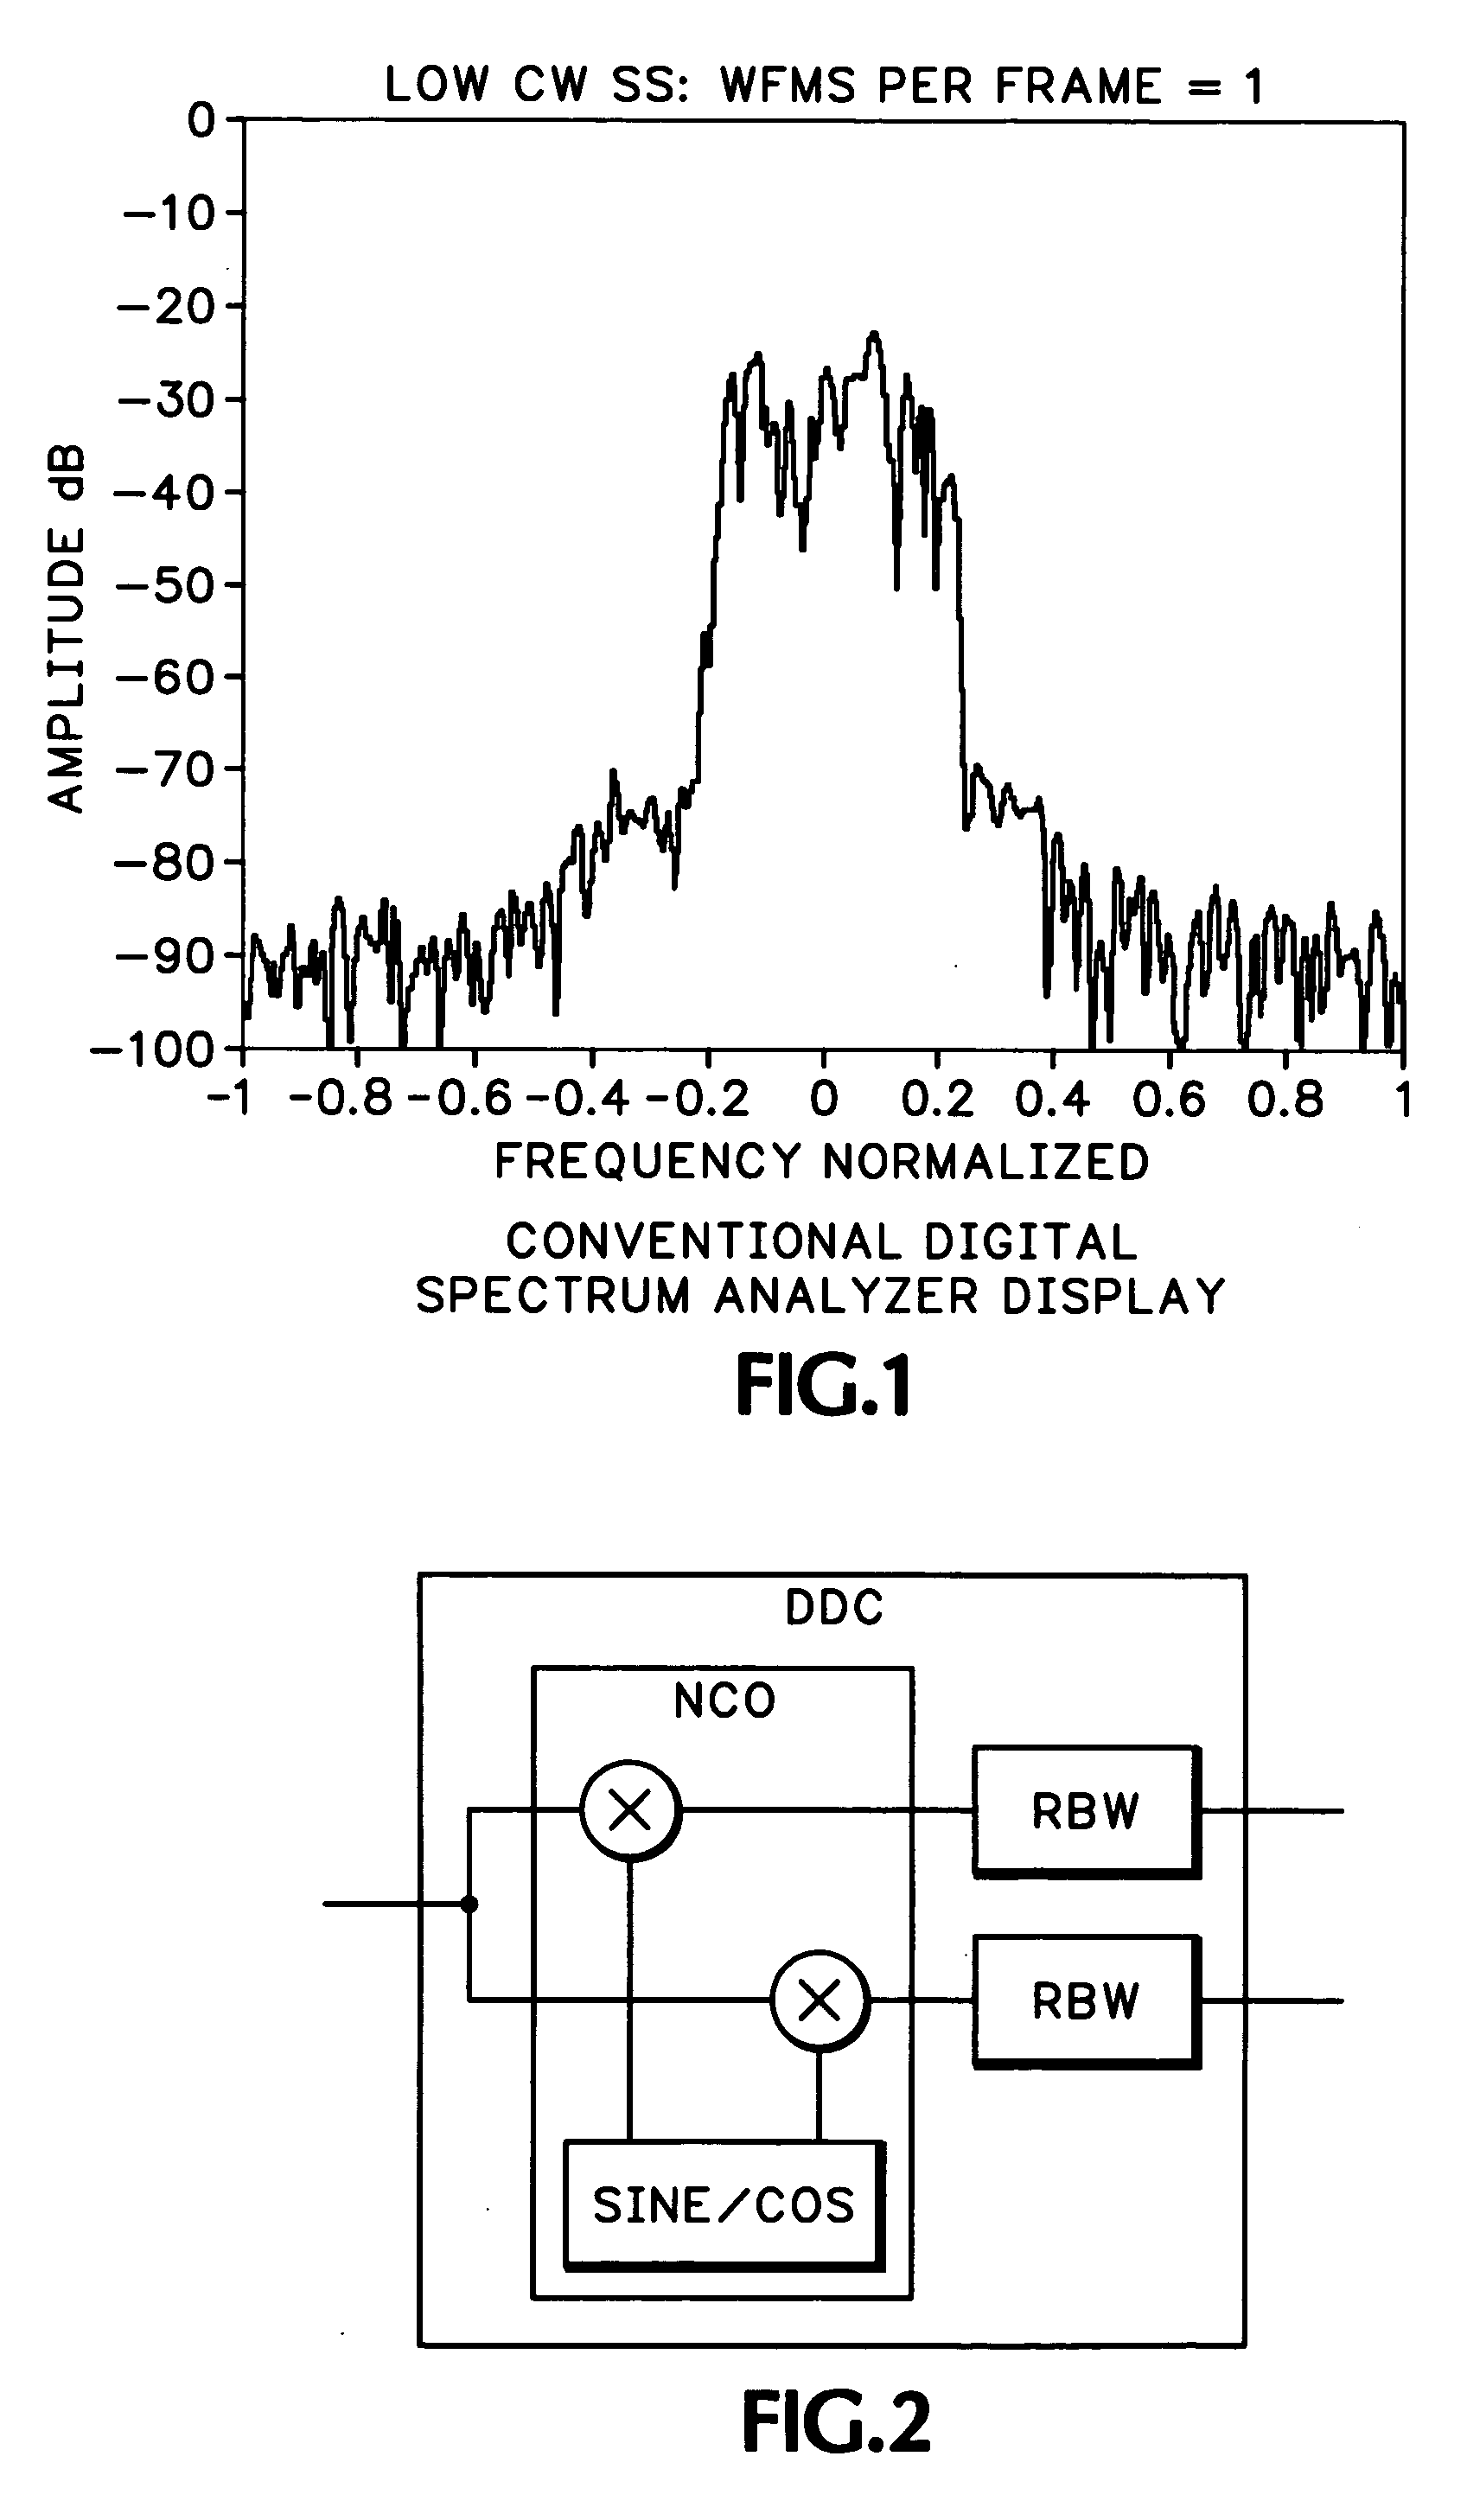 Digital phosphor spectrum analyzer